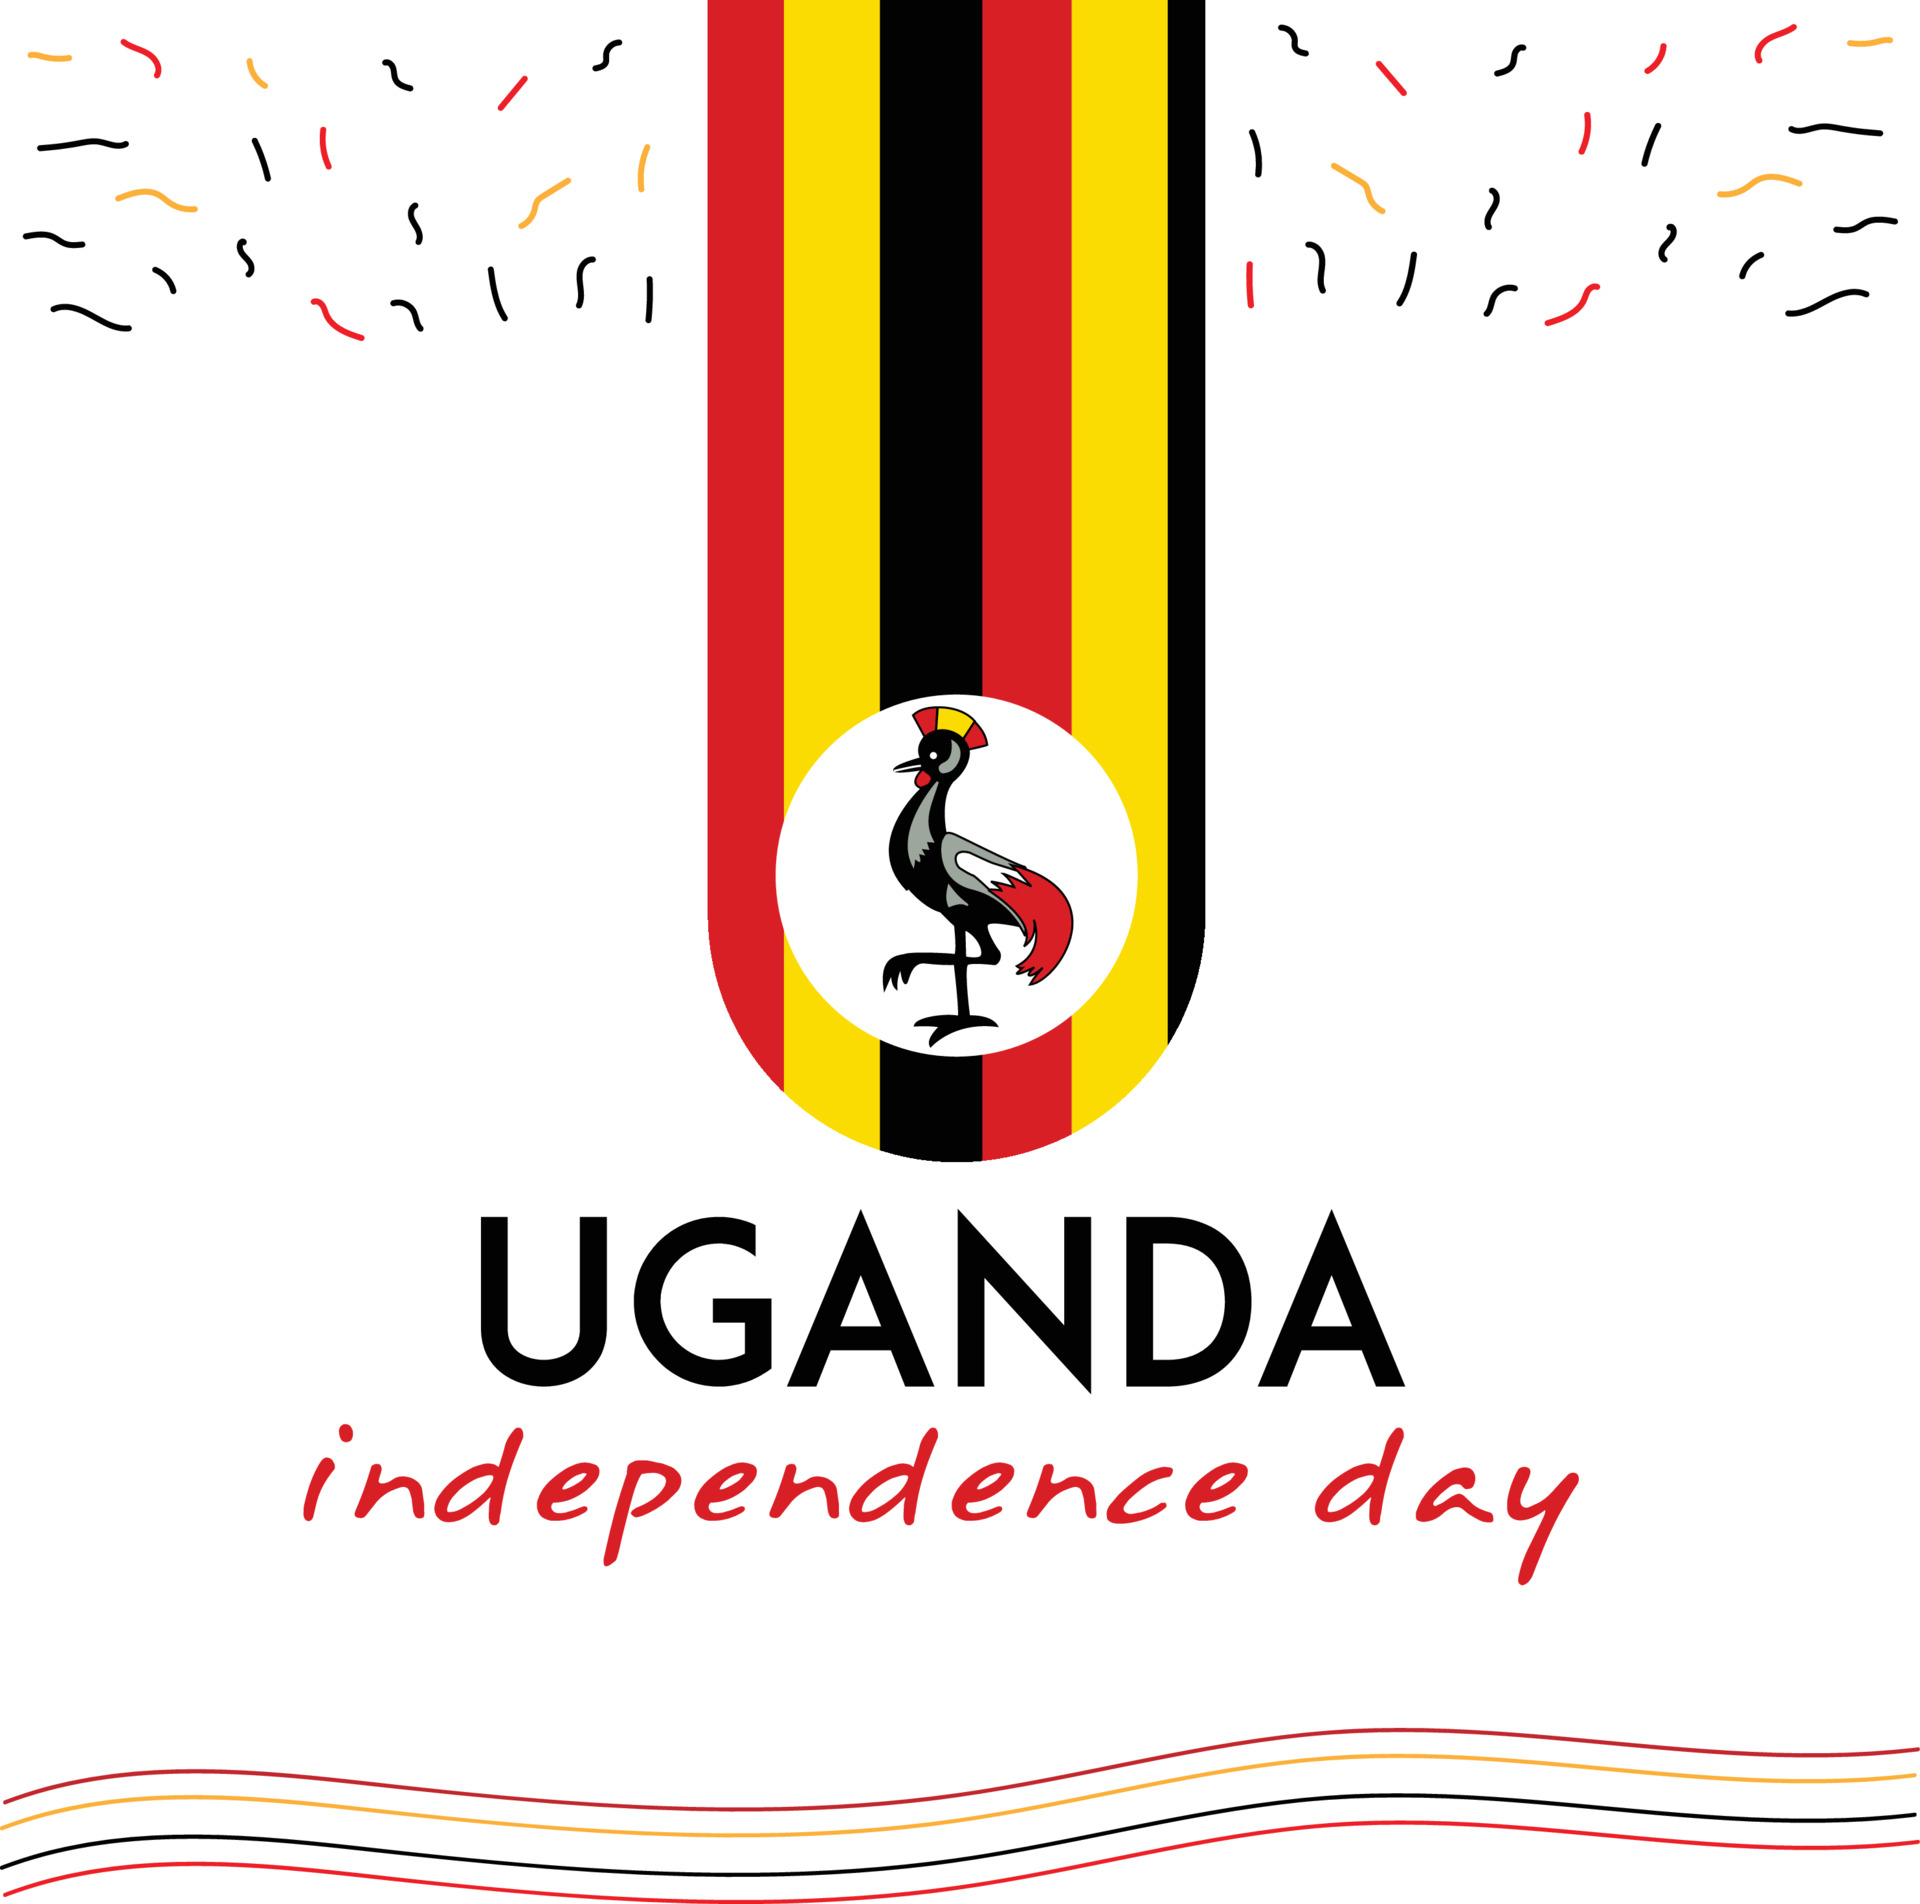 Uganda independece day wallpaper with uganda national bird 3635741 Vector  Art at Vecteezy